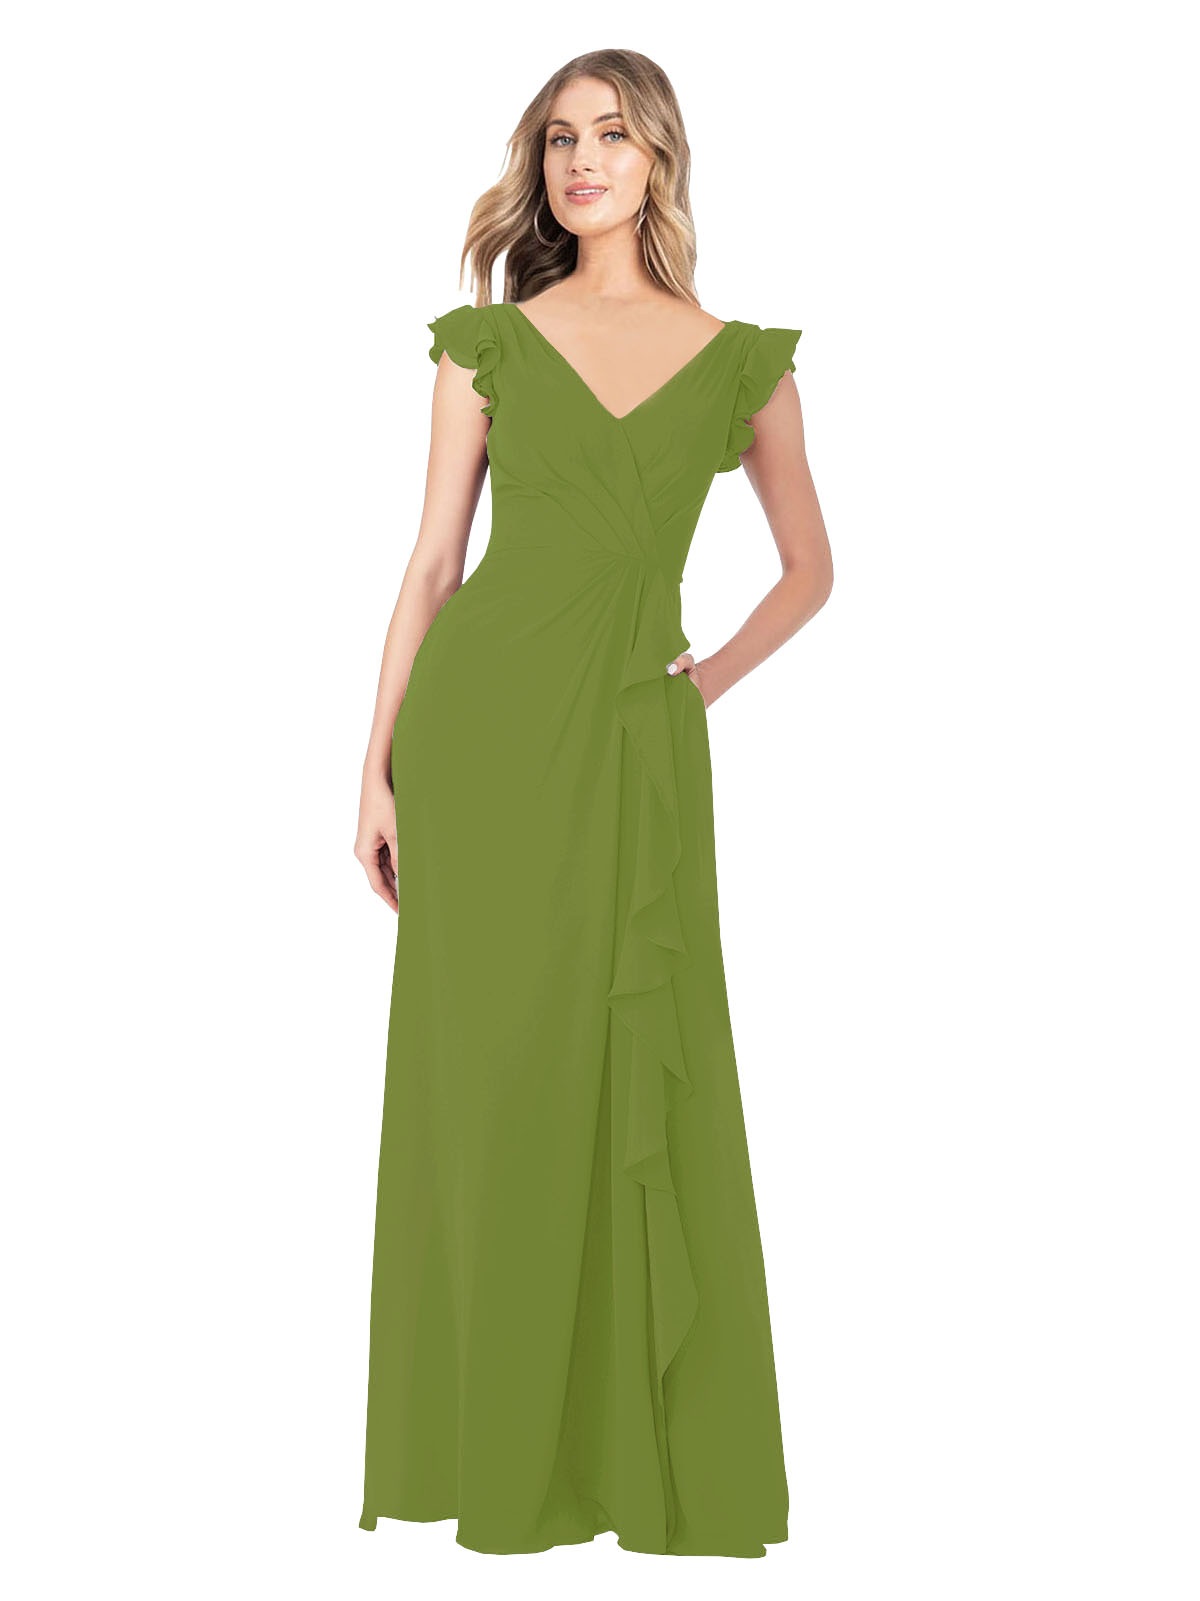 Olive Green A-Line V-Neck Cap Sleeves Long Bridesmaid Dress Taryn